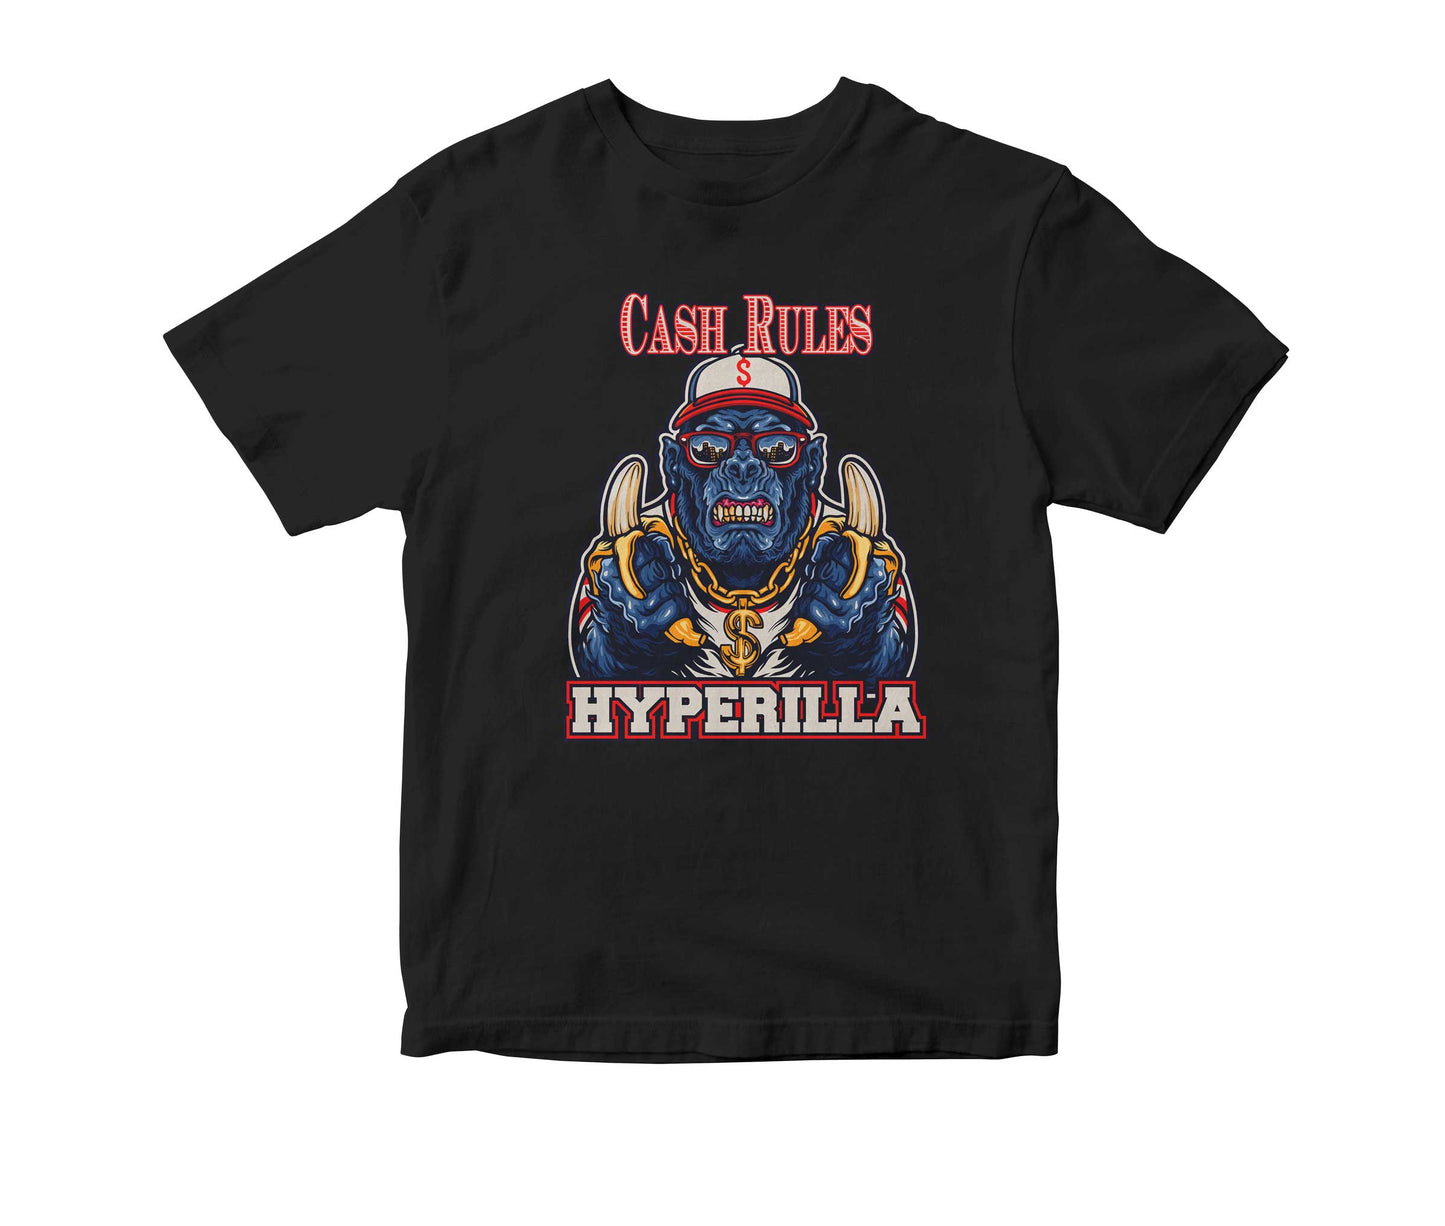 Cash Rules The HyperRilla Adult Unisex T-Shirt